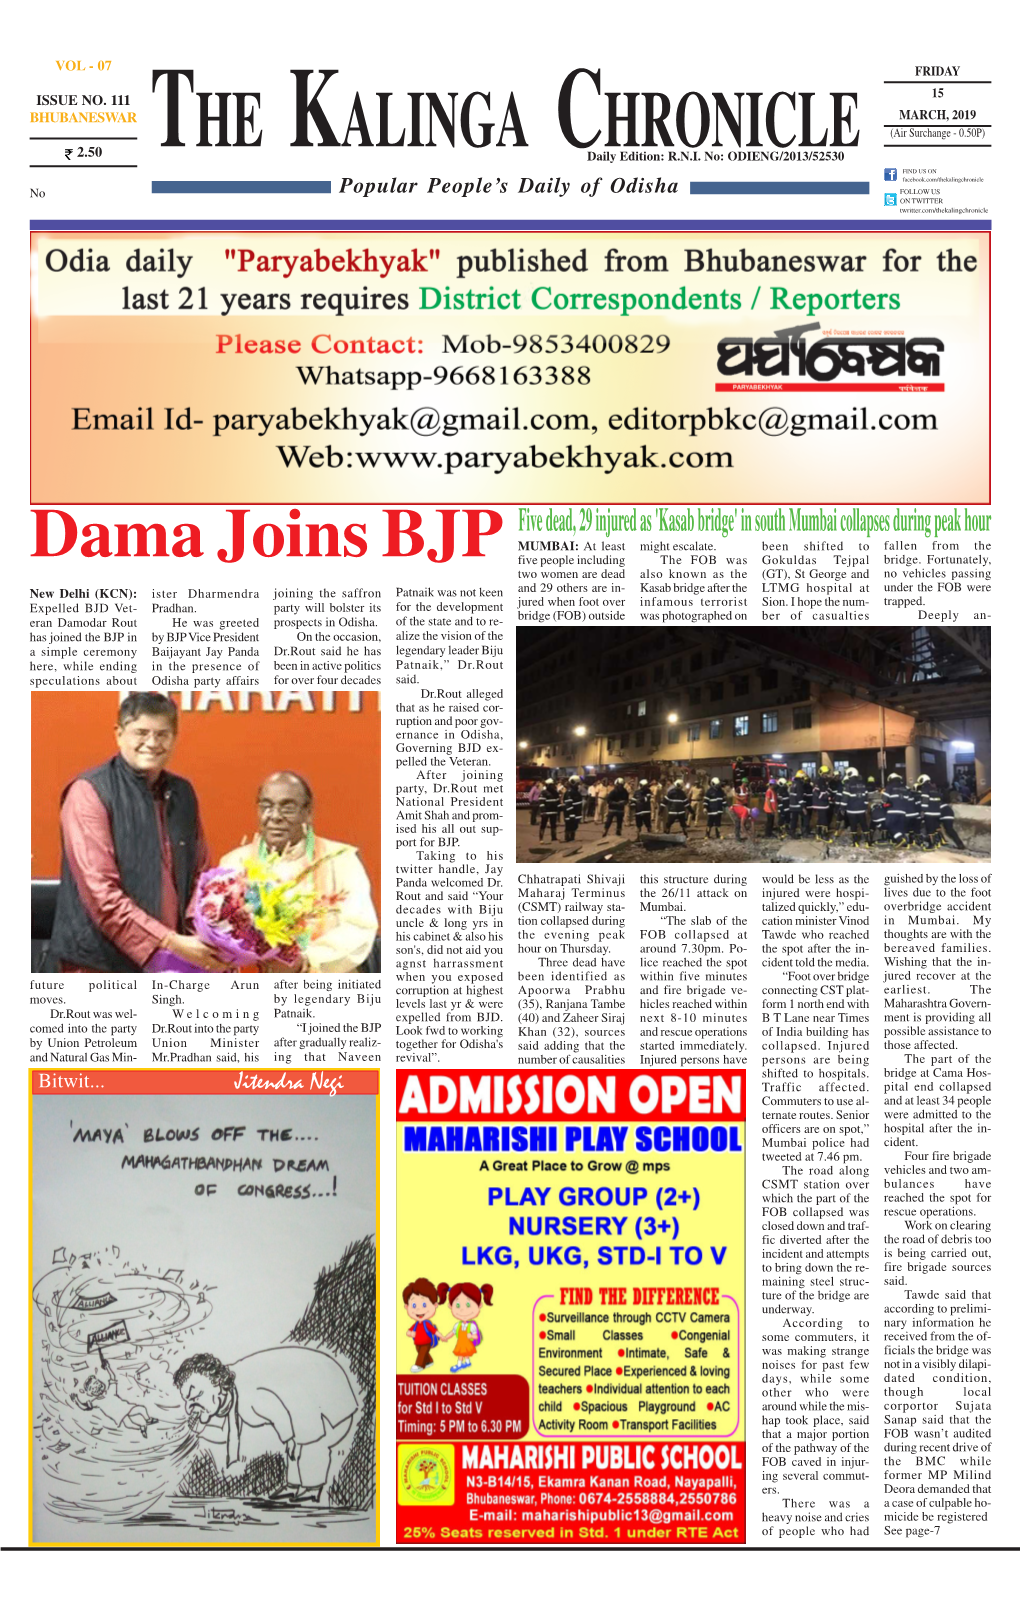 Dama Joins BJP Five People Including the FOB Was Gokuldas Tejpal Bridge